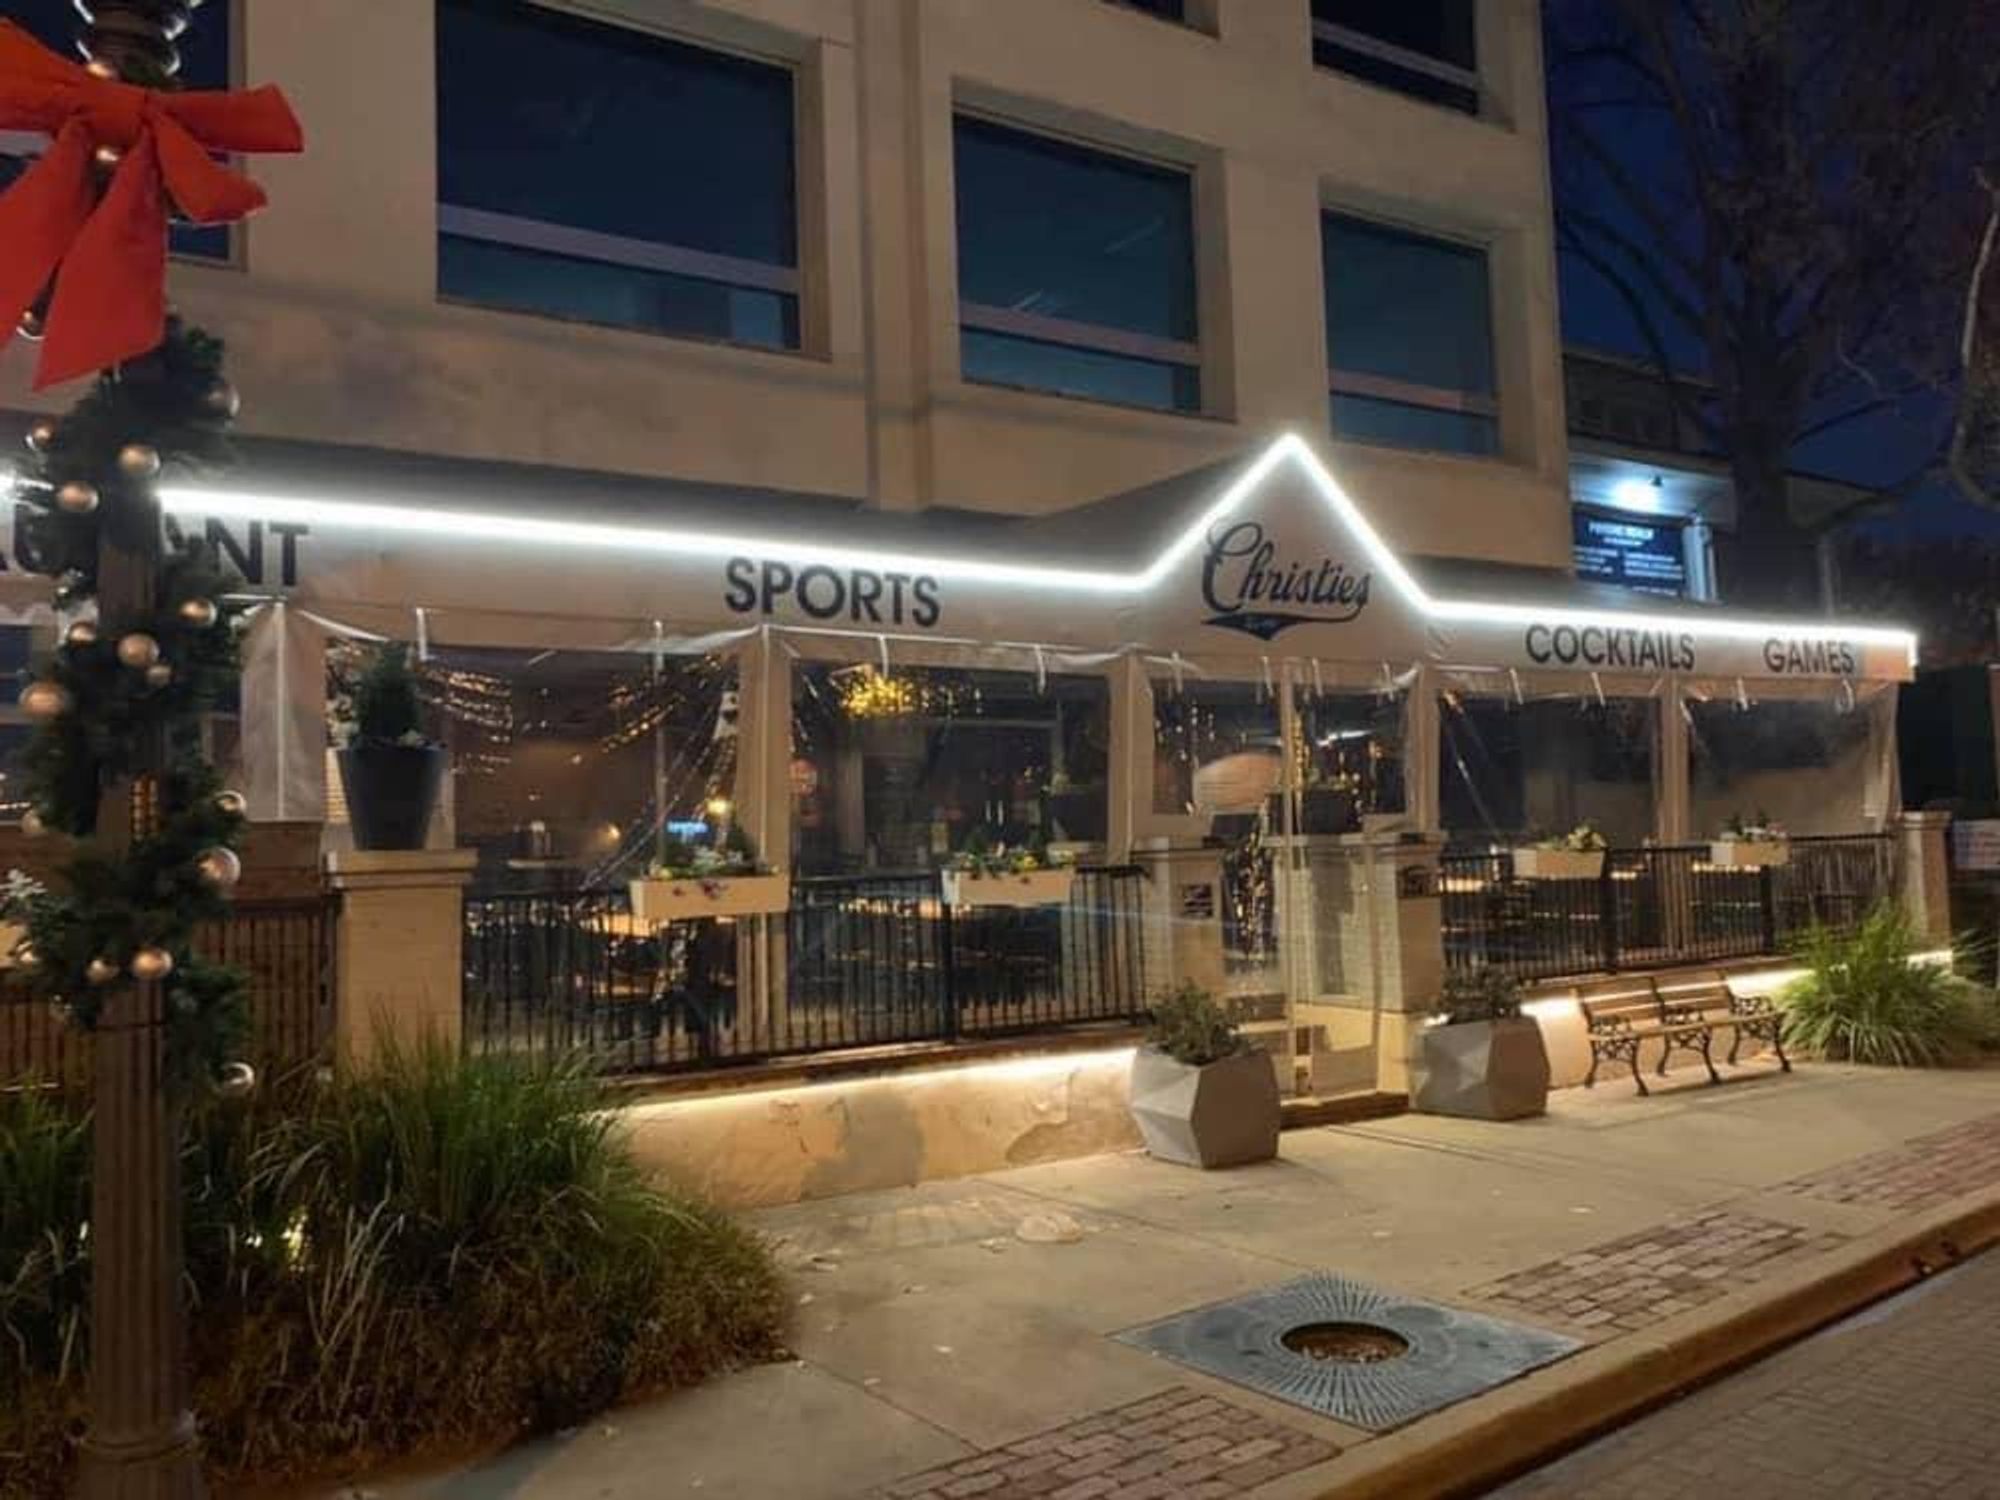 Christies Sports Bar in Dallas